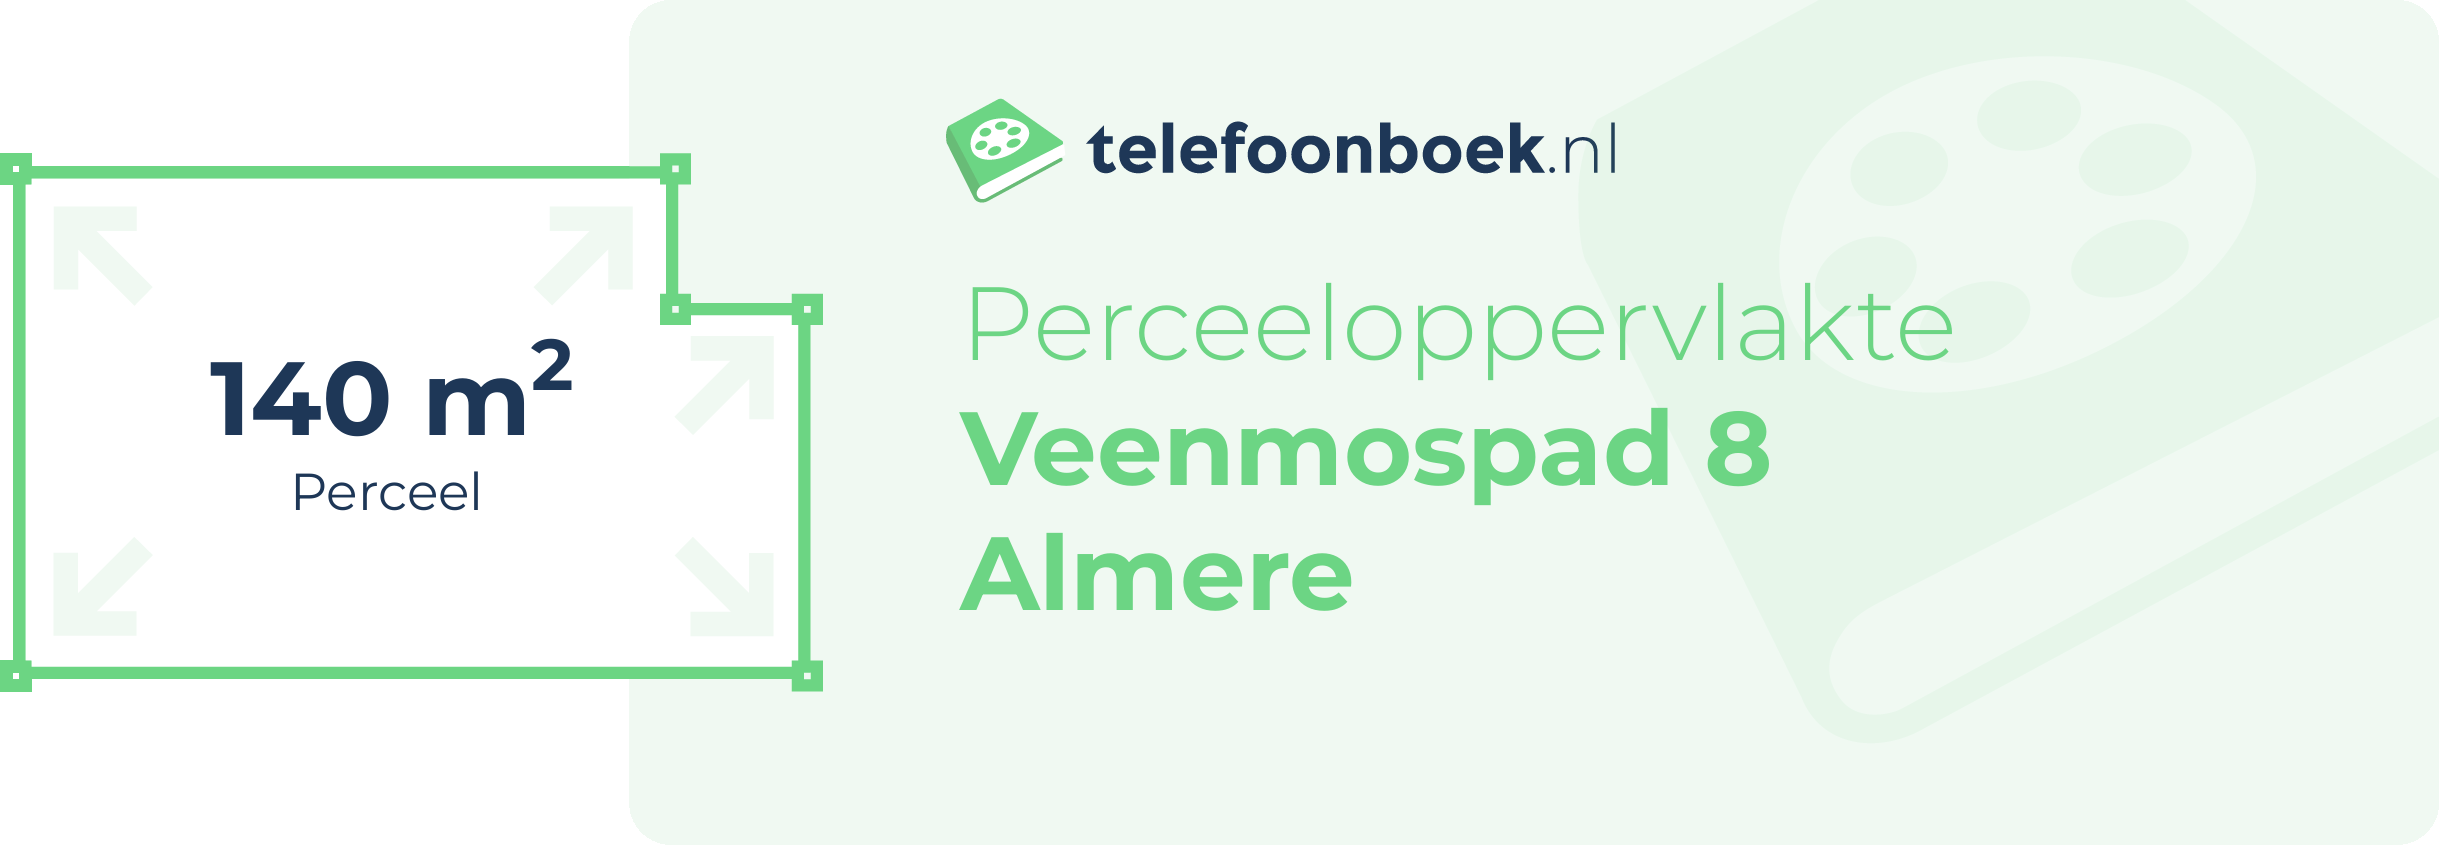 Perceeloppervlakte Veenmospad 8 Almere